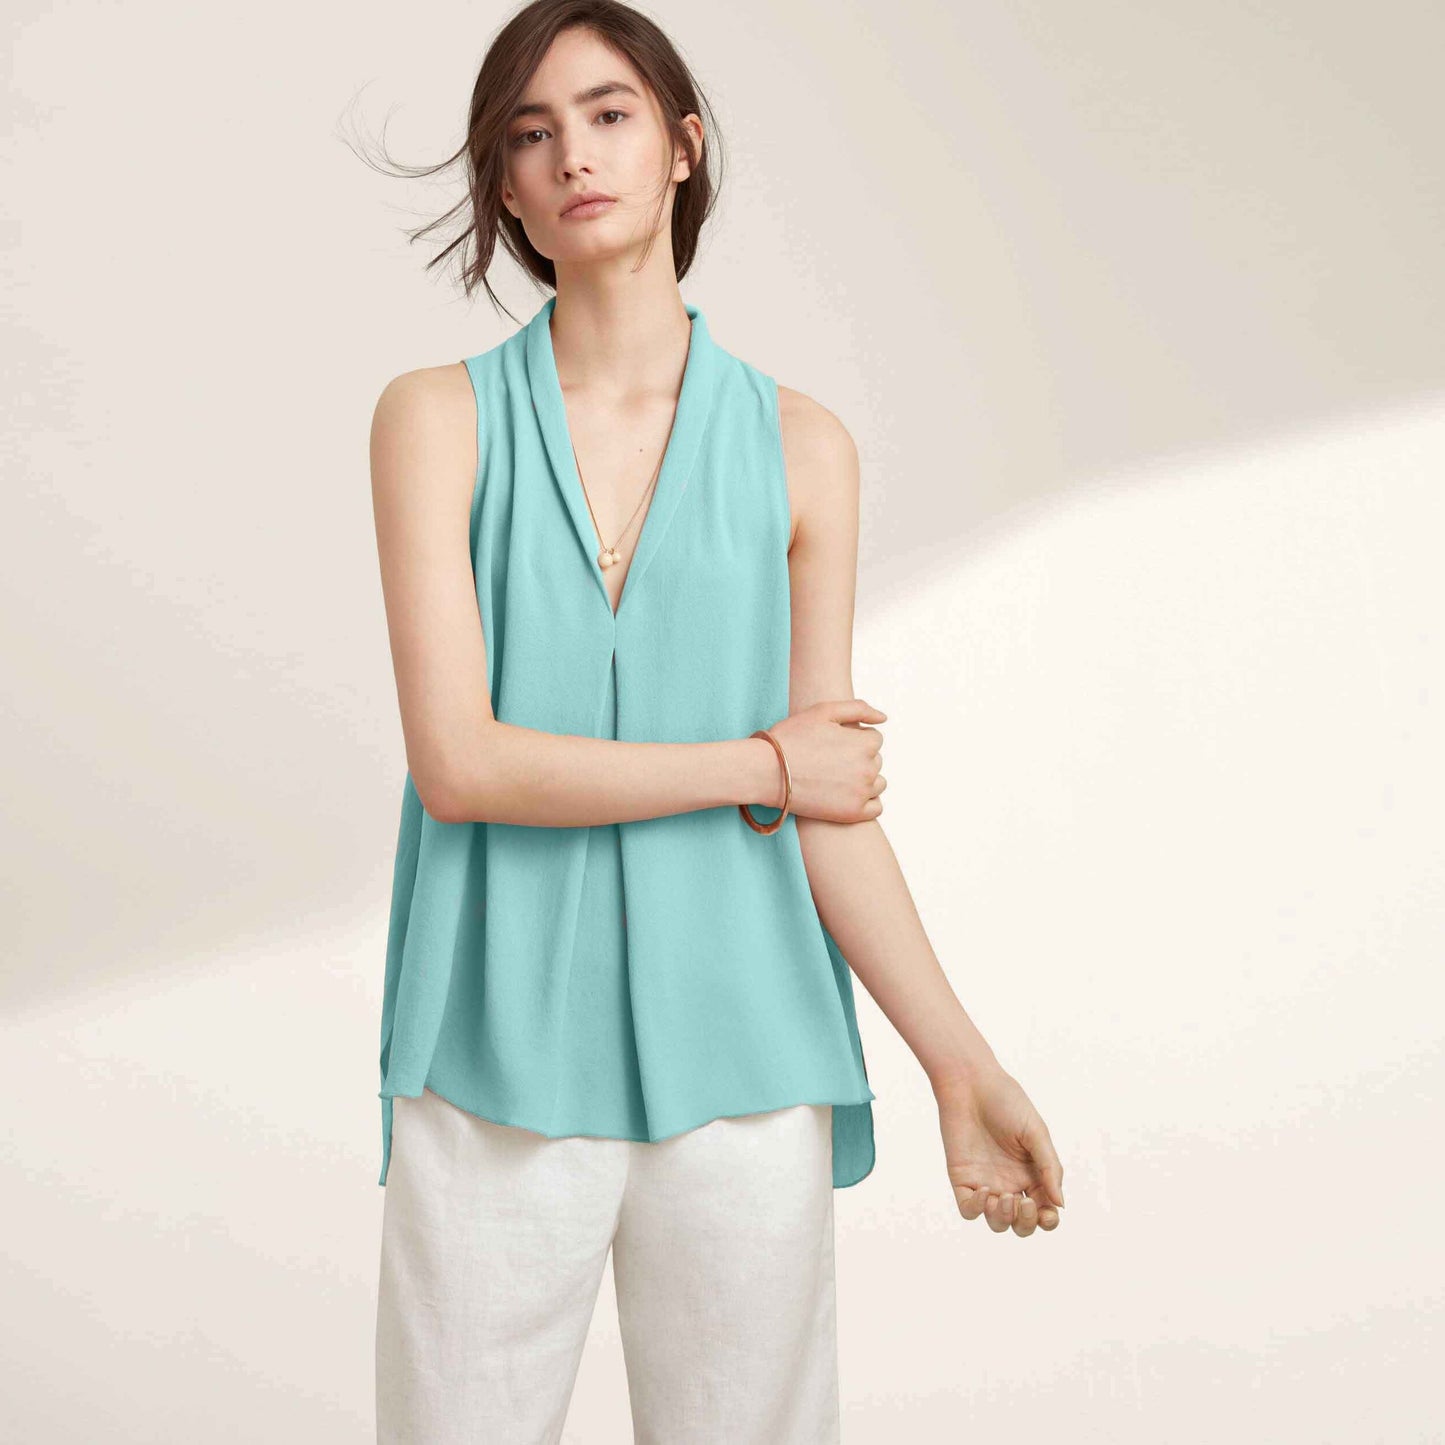 Wilfred Nuit sleeveless blouse - size xxs